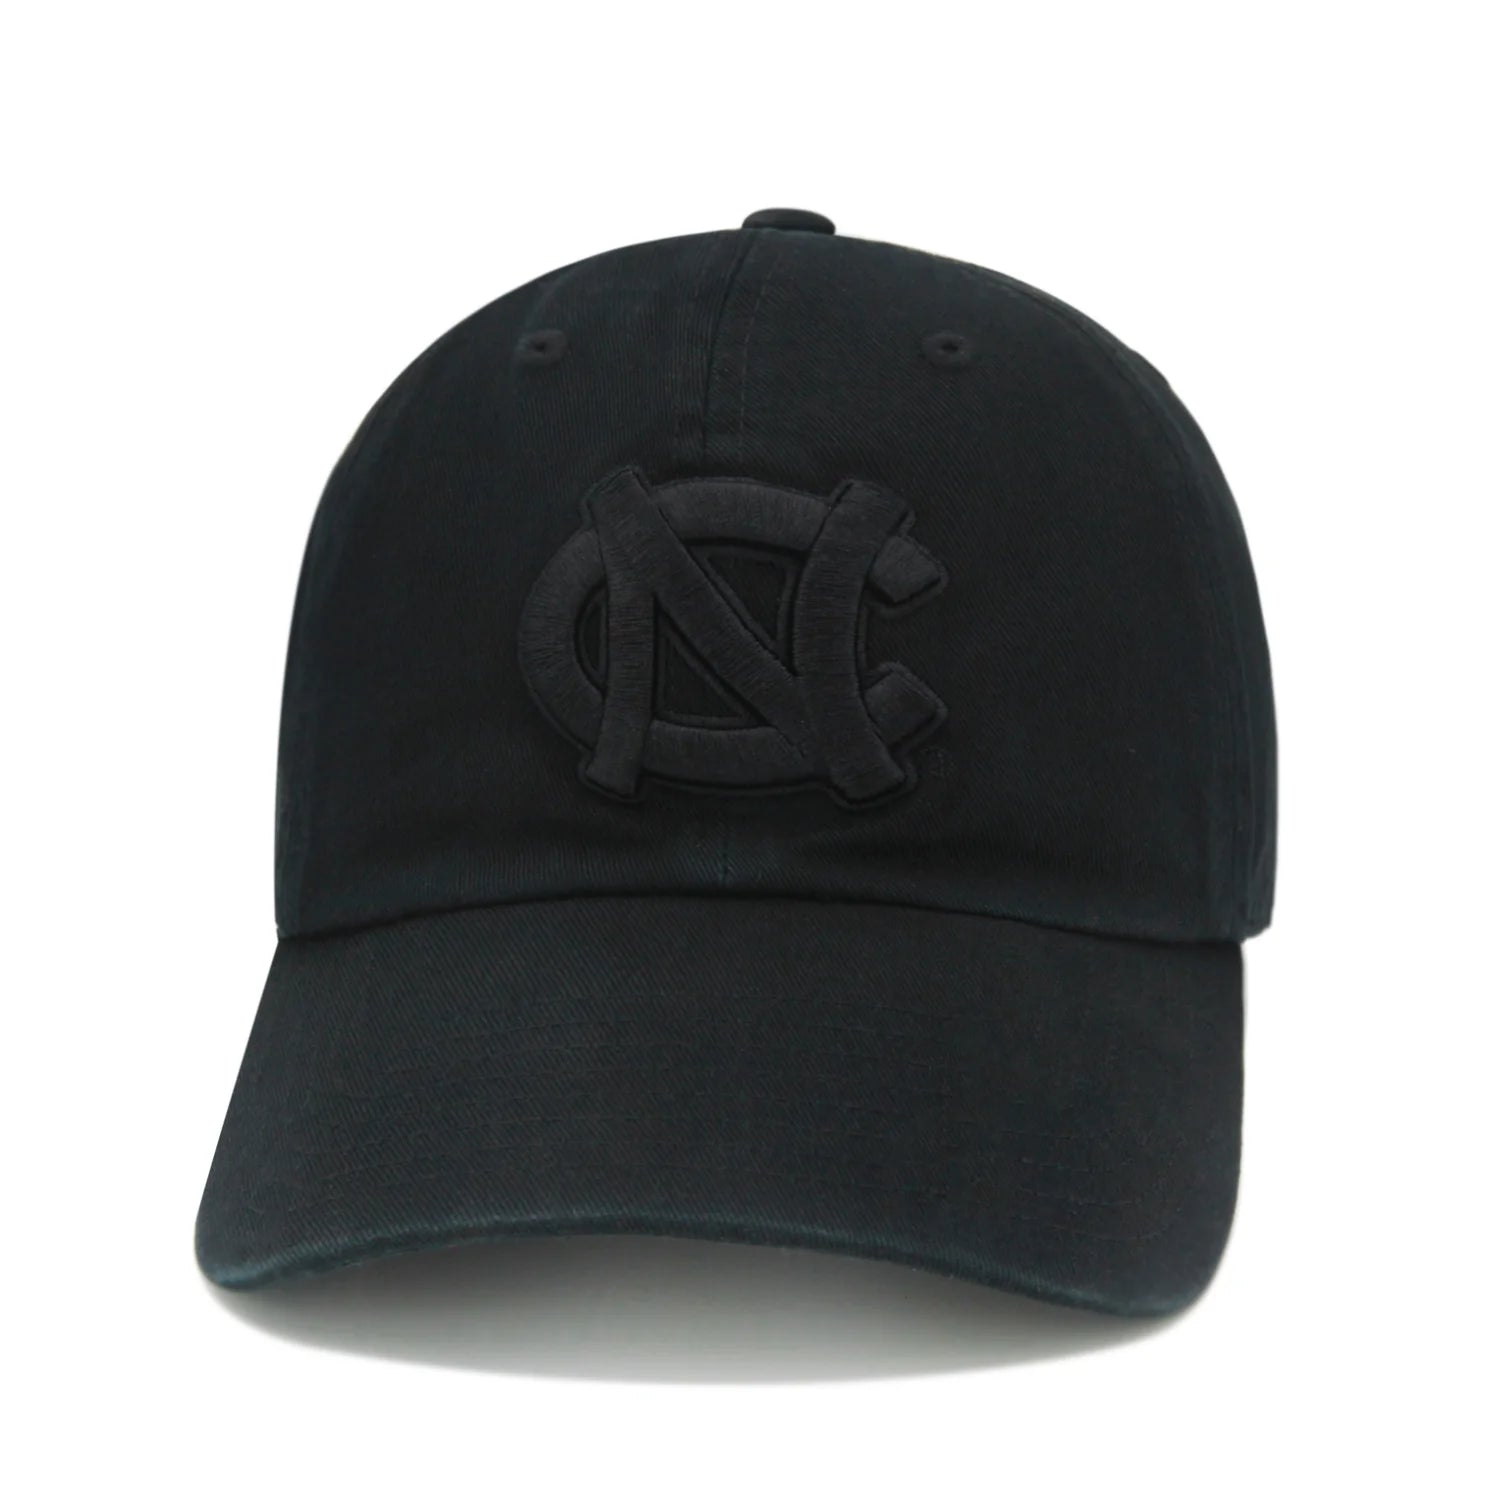 Adjustable UNC Vintage Hat